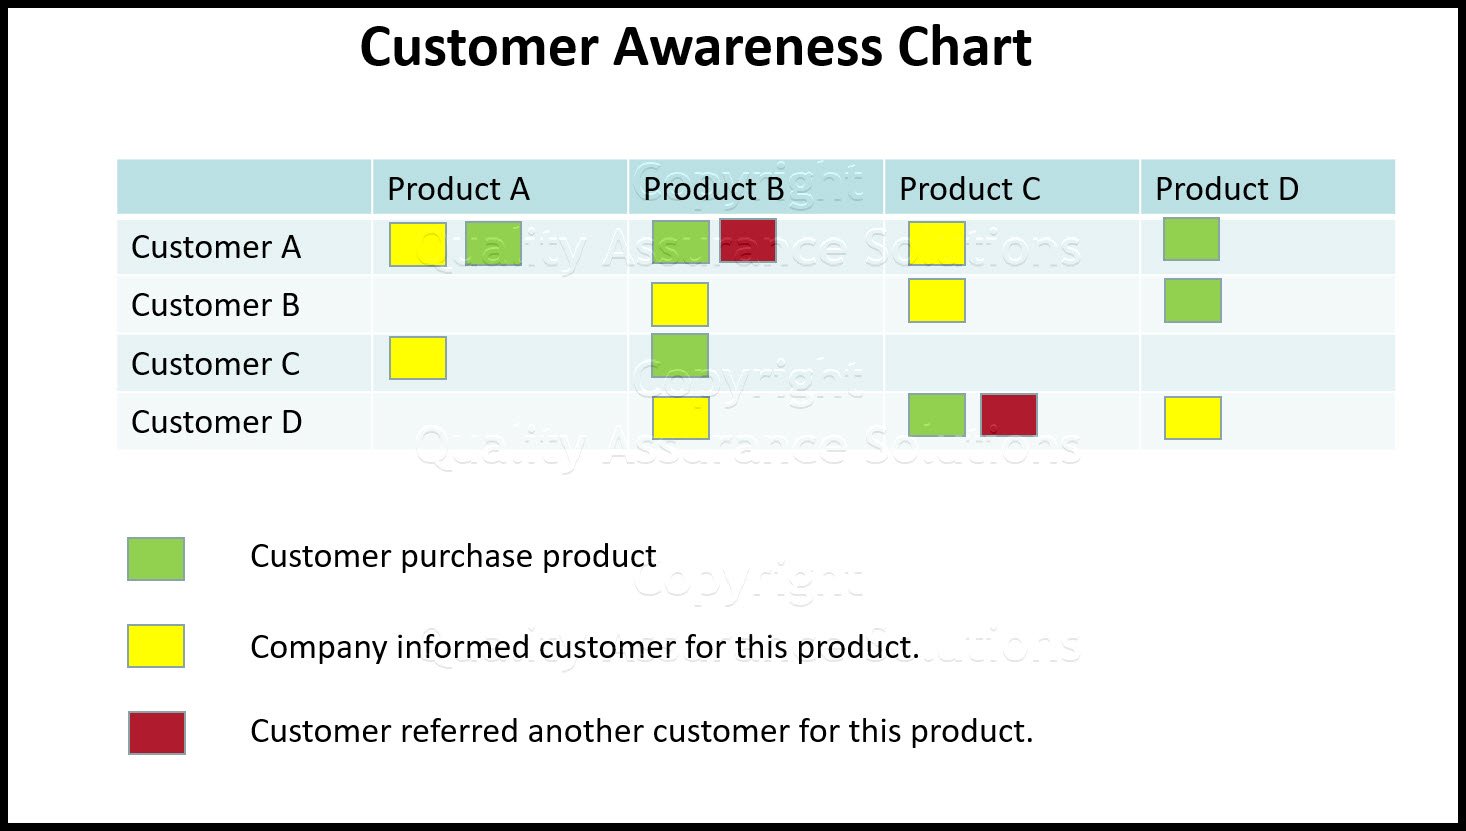 Discover customer awareness skills and grasp this customer and product awareness chart. 